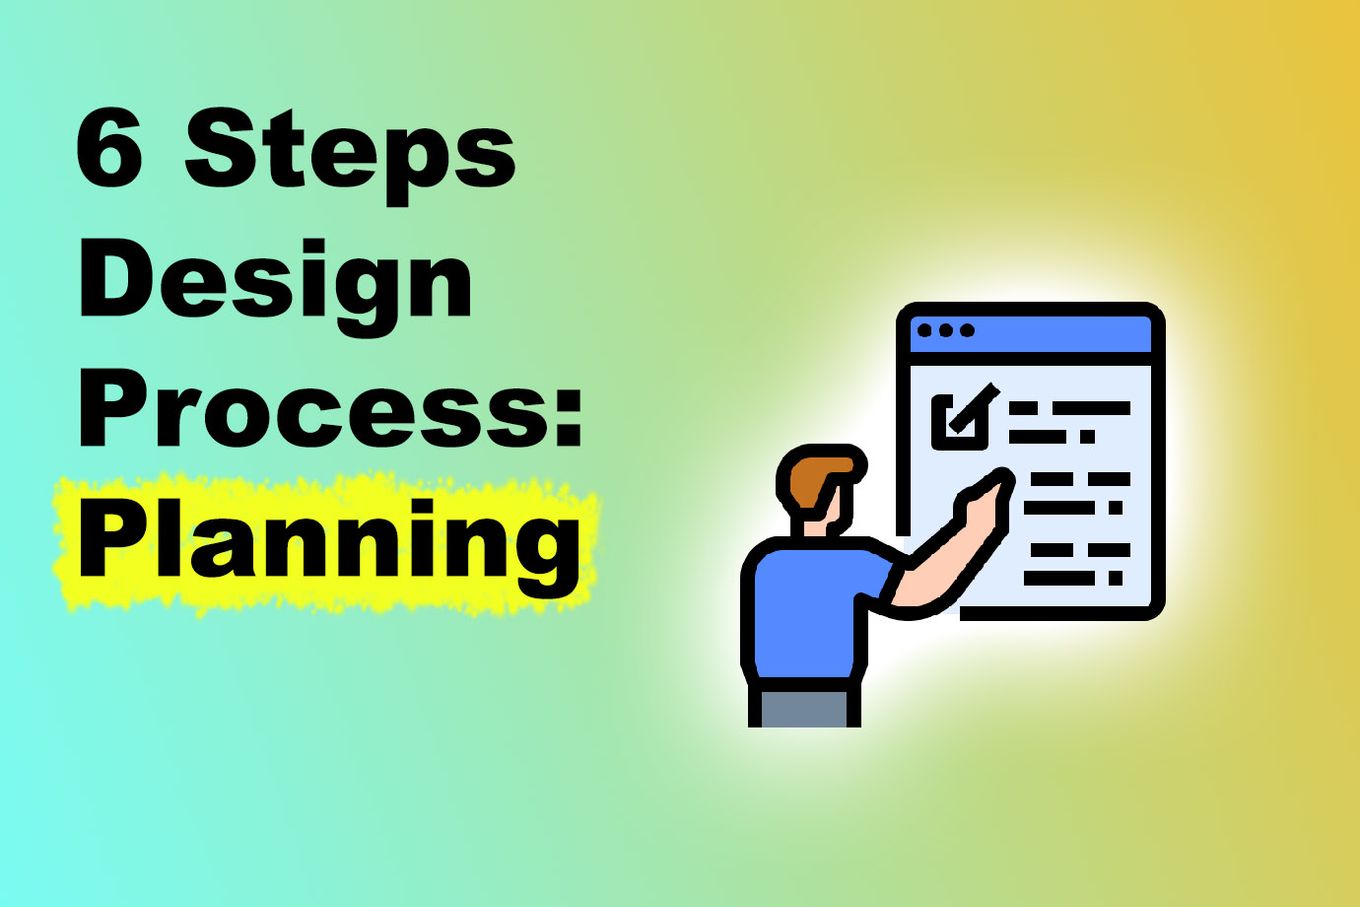 6 Steps Design Process, Planning